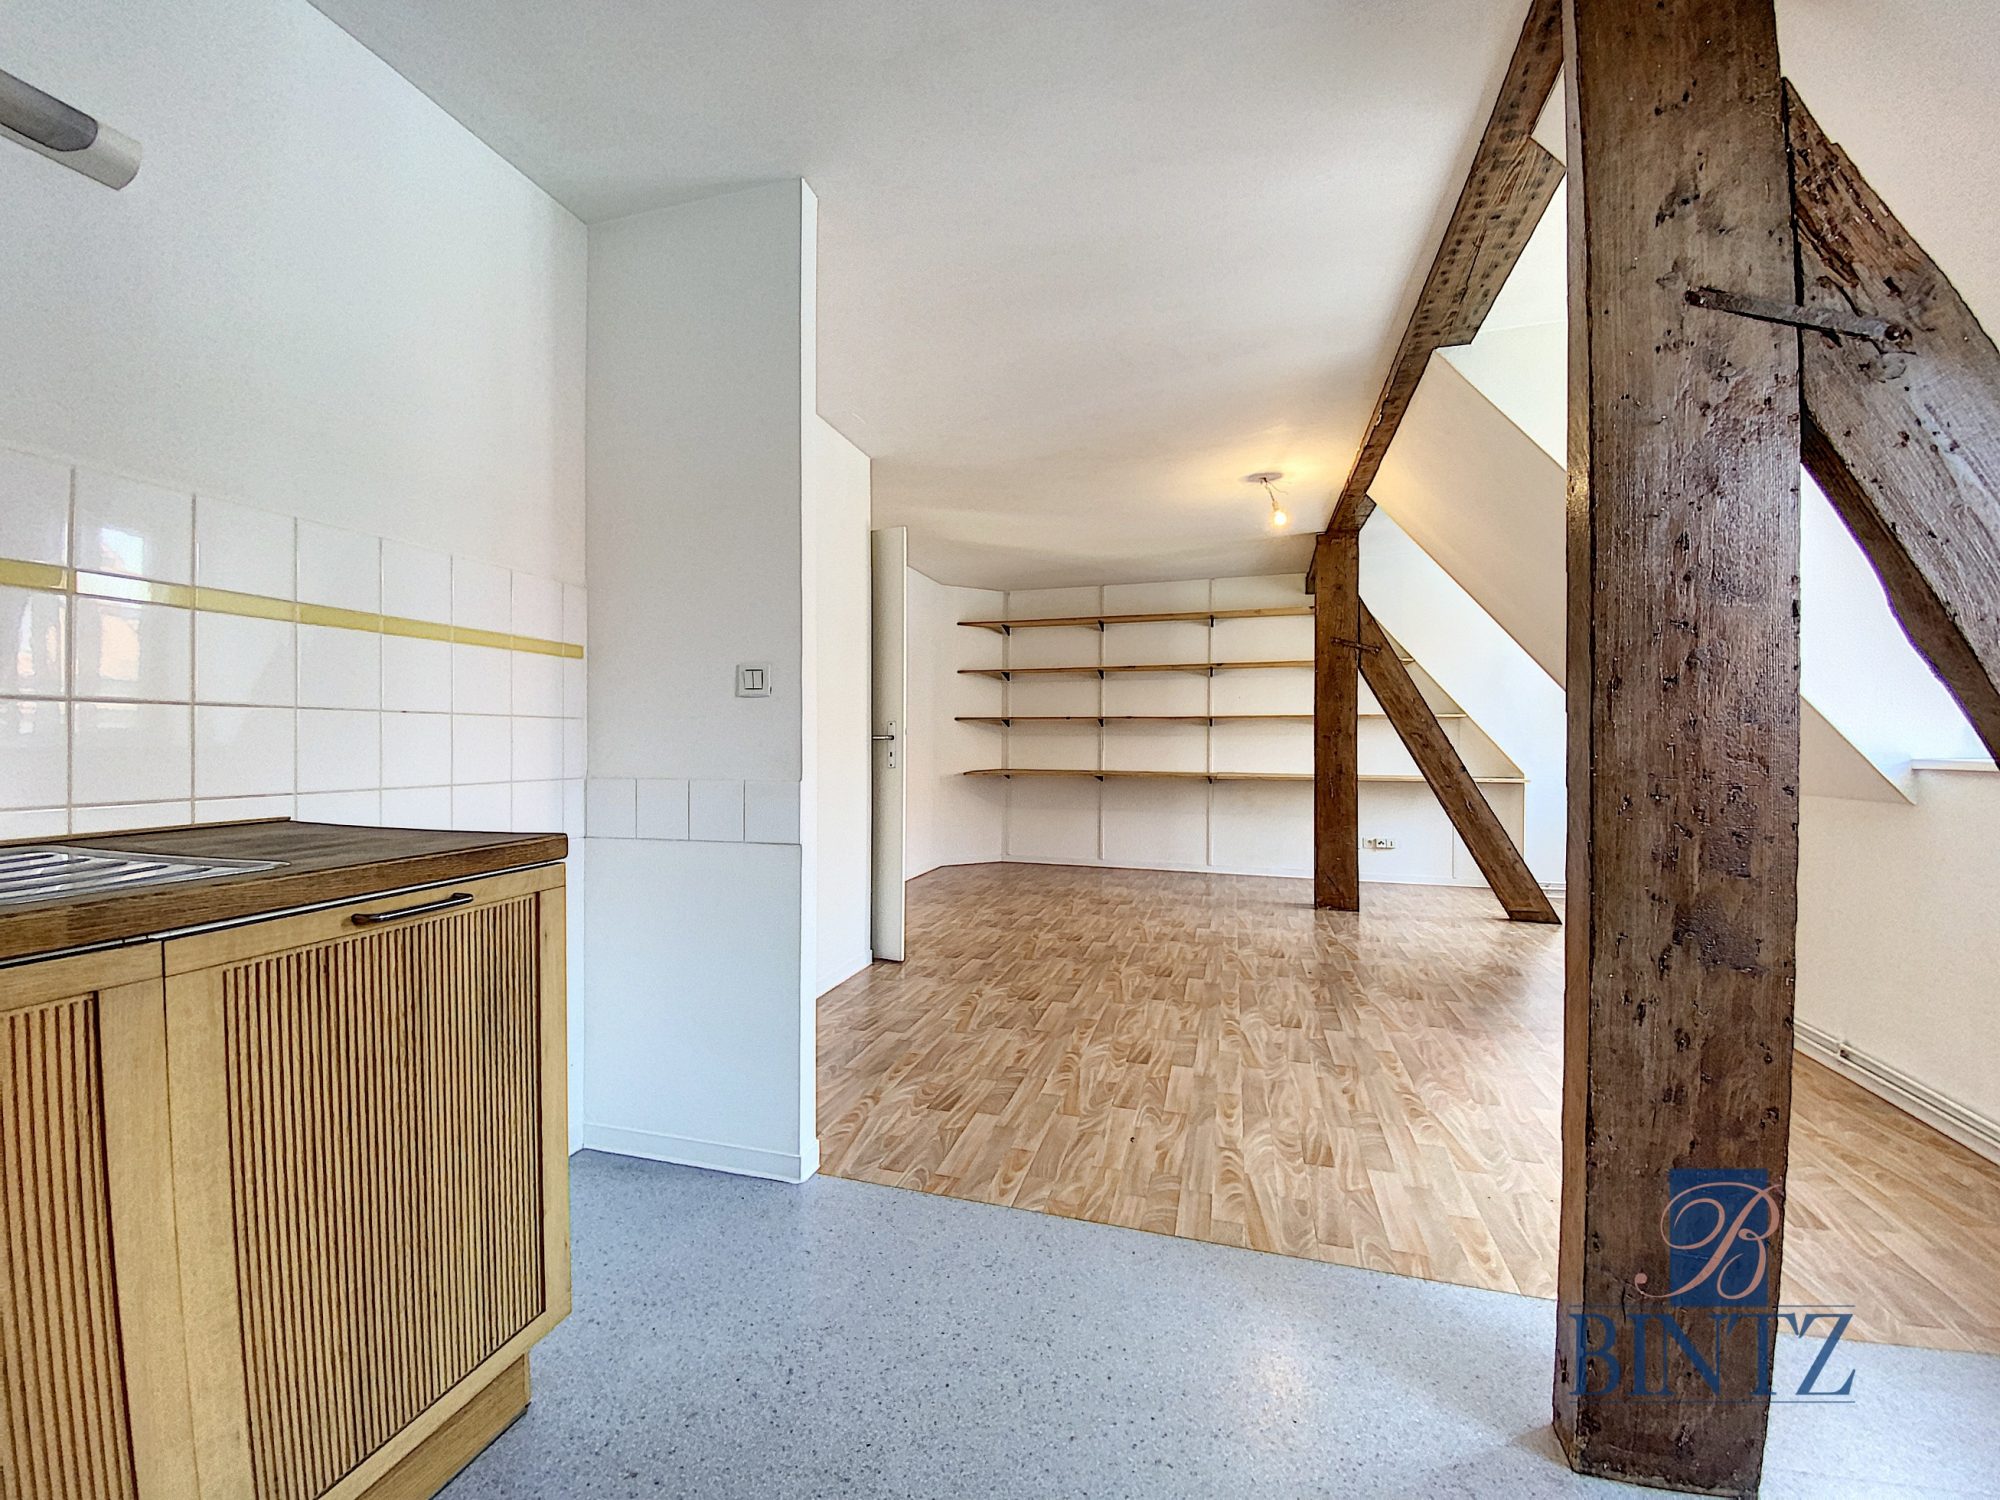 3 PIECES MUSEE D’ART MODERNE - location appartement Strasbourg - Bintz Immobilier - 7